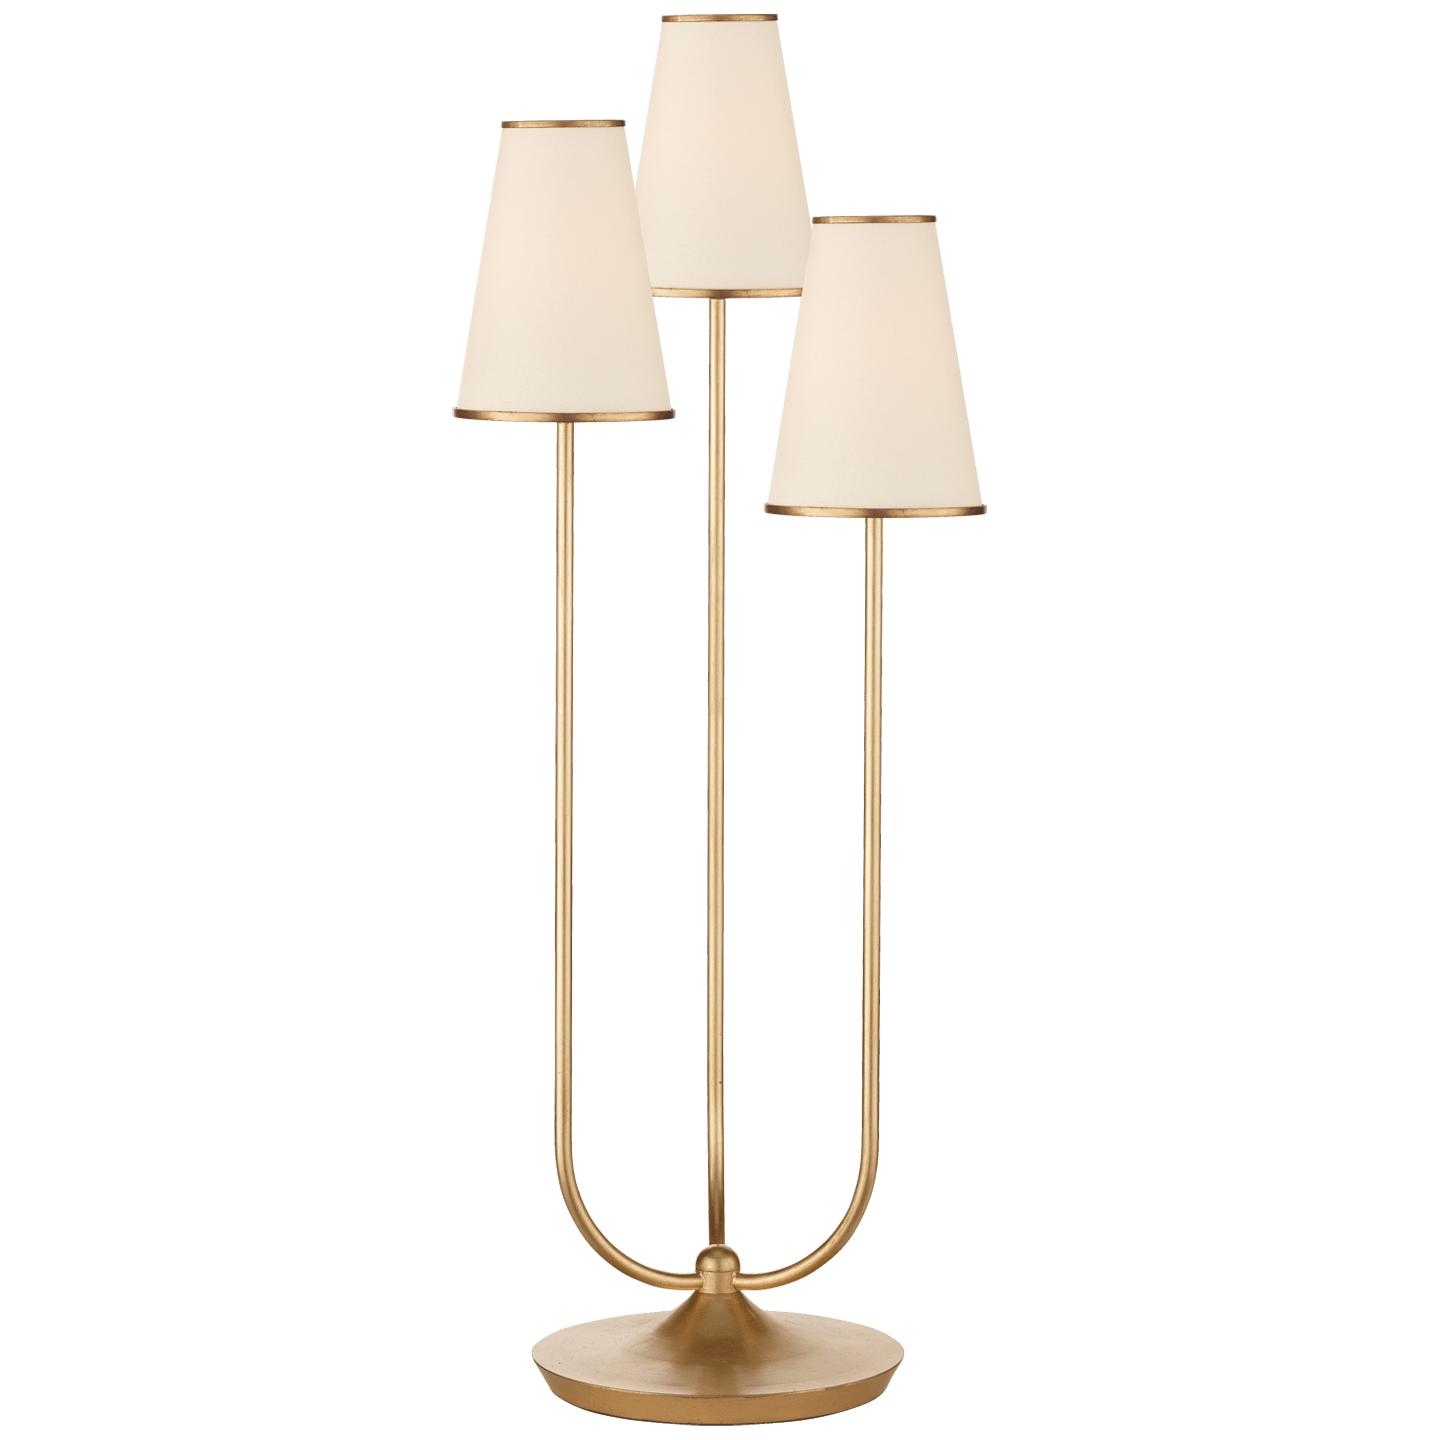 Купить Настольная лампа Montreuil Triple Table Lamp в интернет-магазине roooms.ru